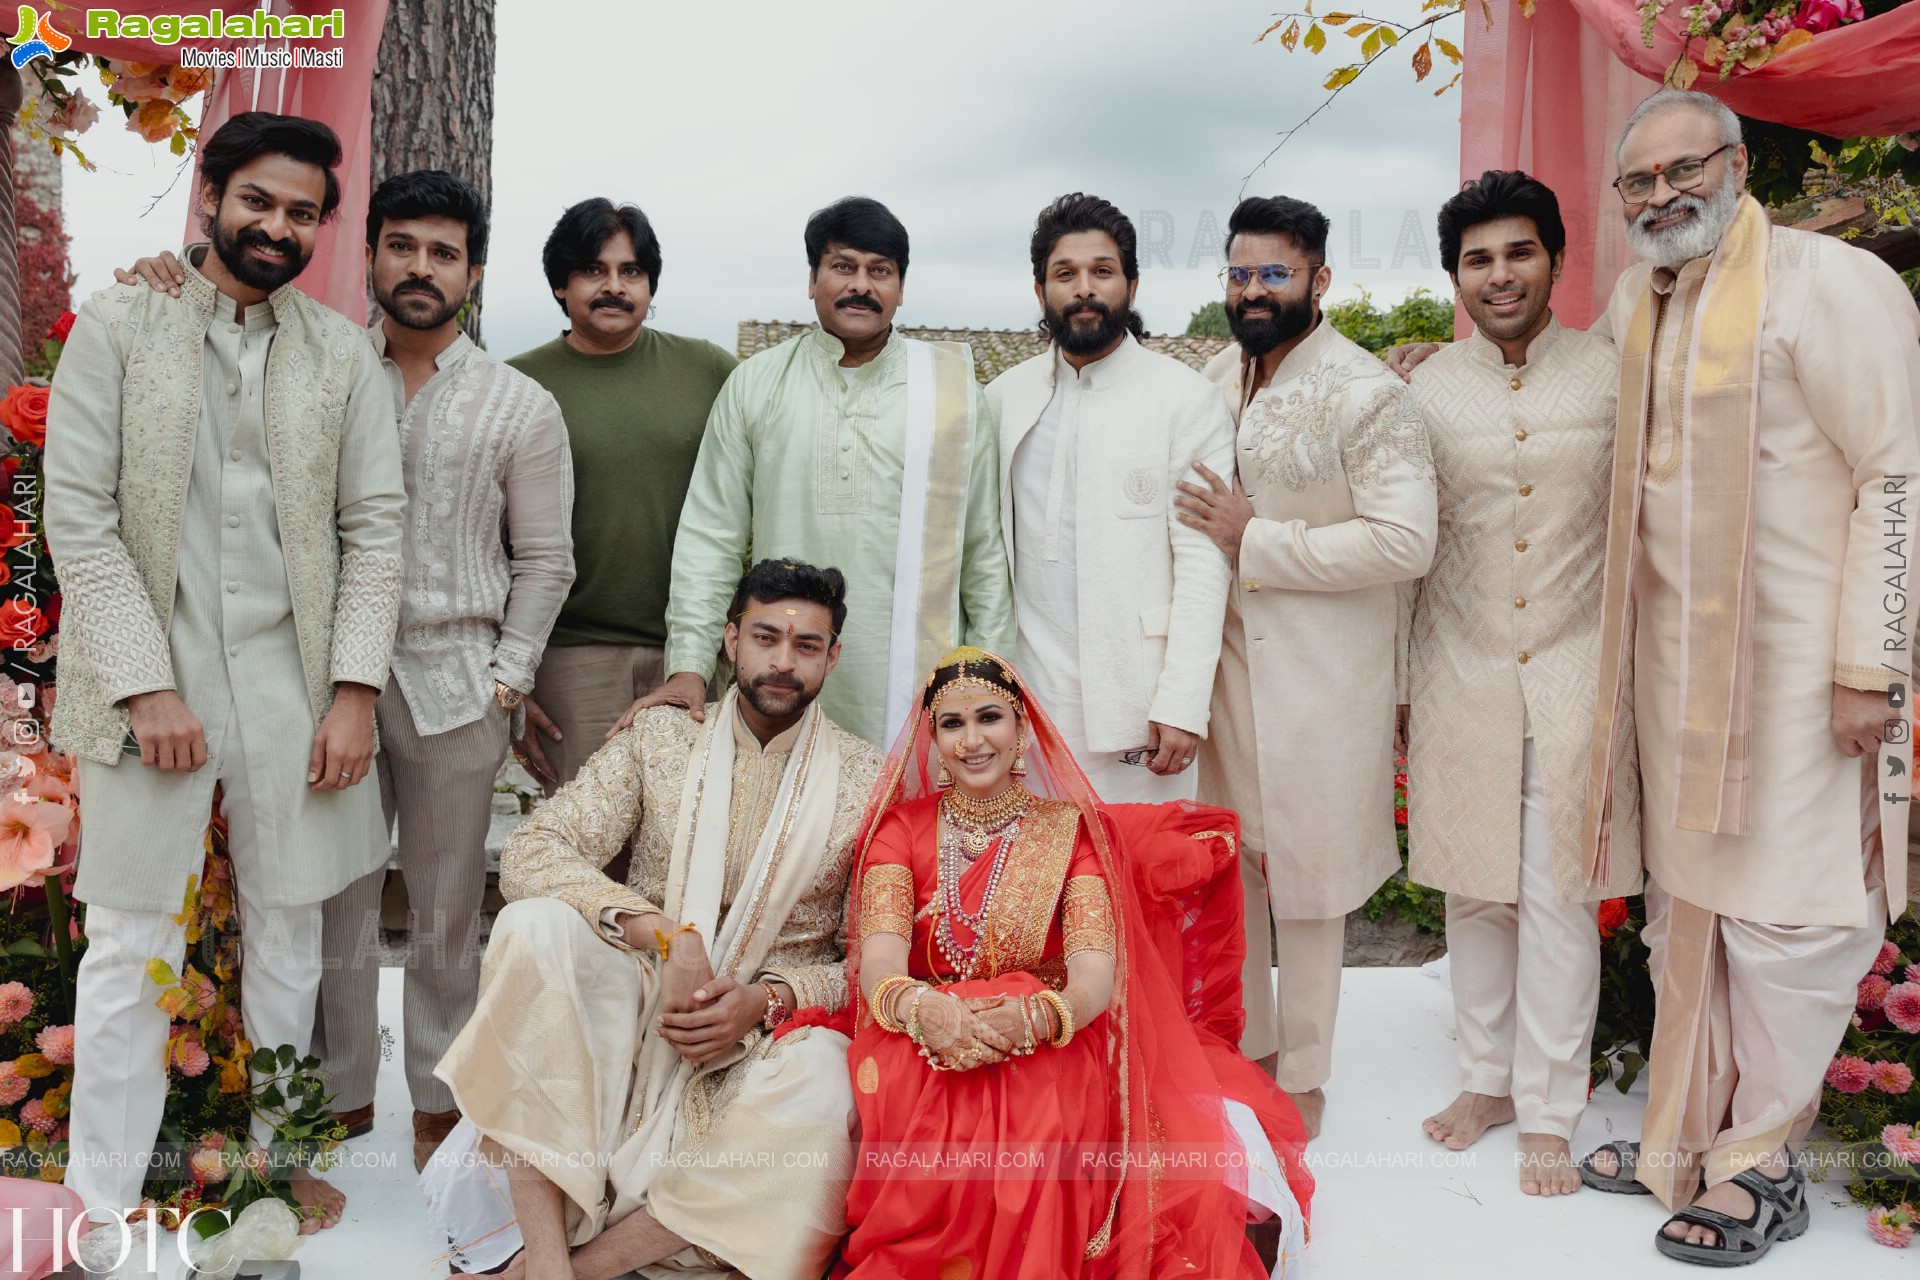 Varun Tej and Lavanya's Wedding Pics